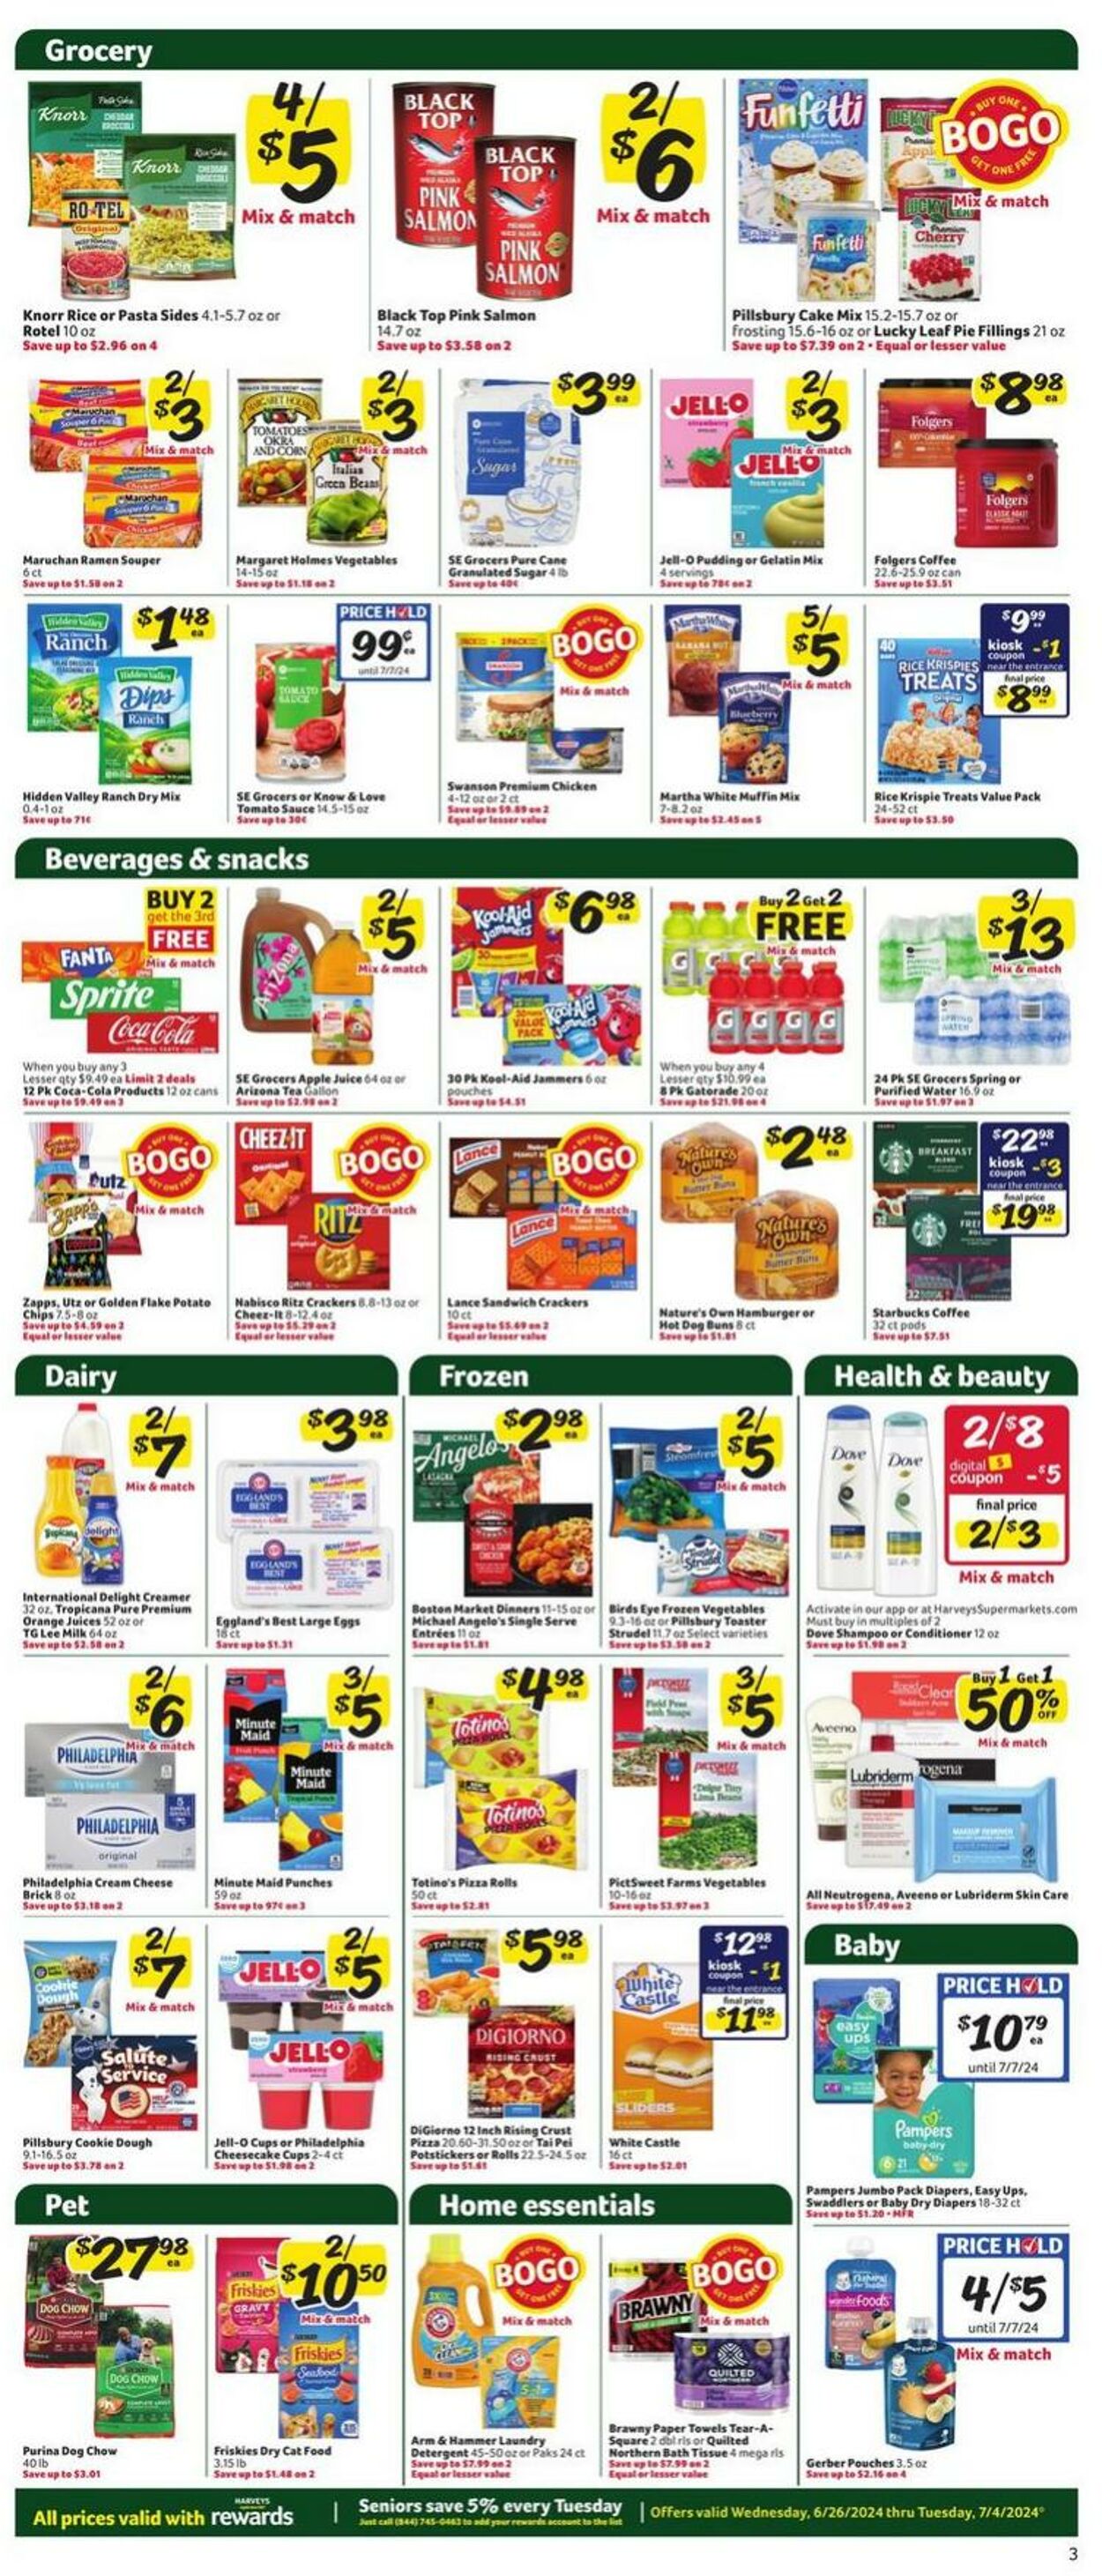 Weekly ad Harvey's Supermarkets 06/26/2024 - 07/02/2024